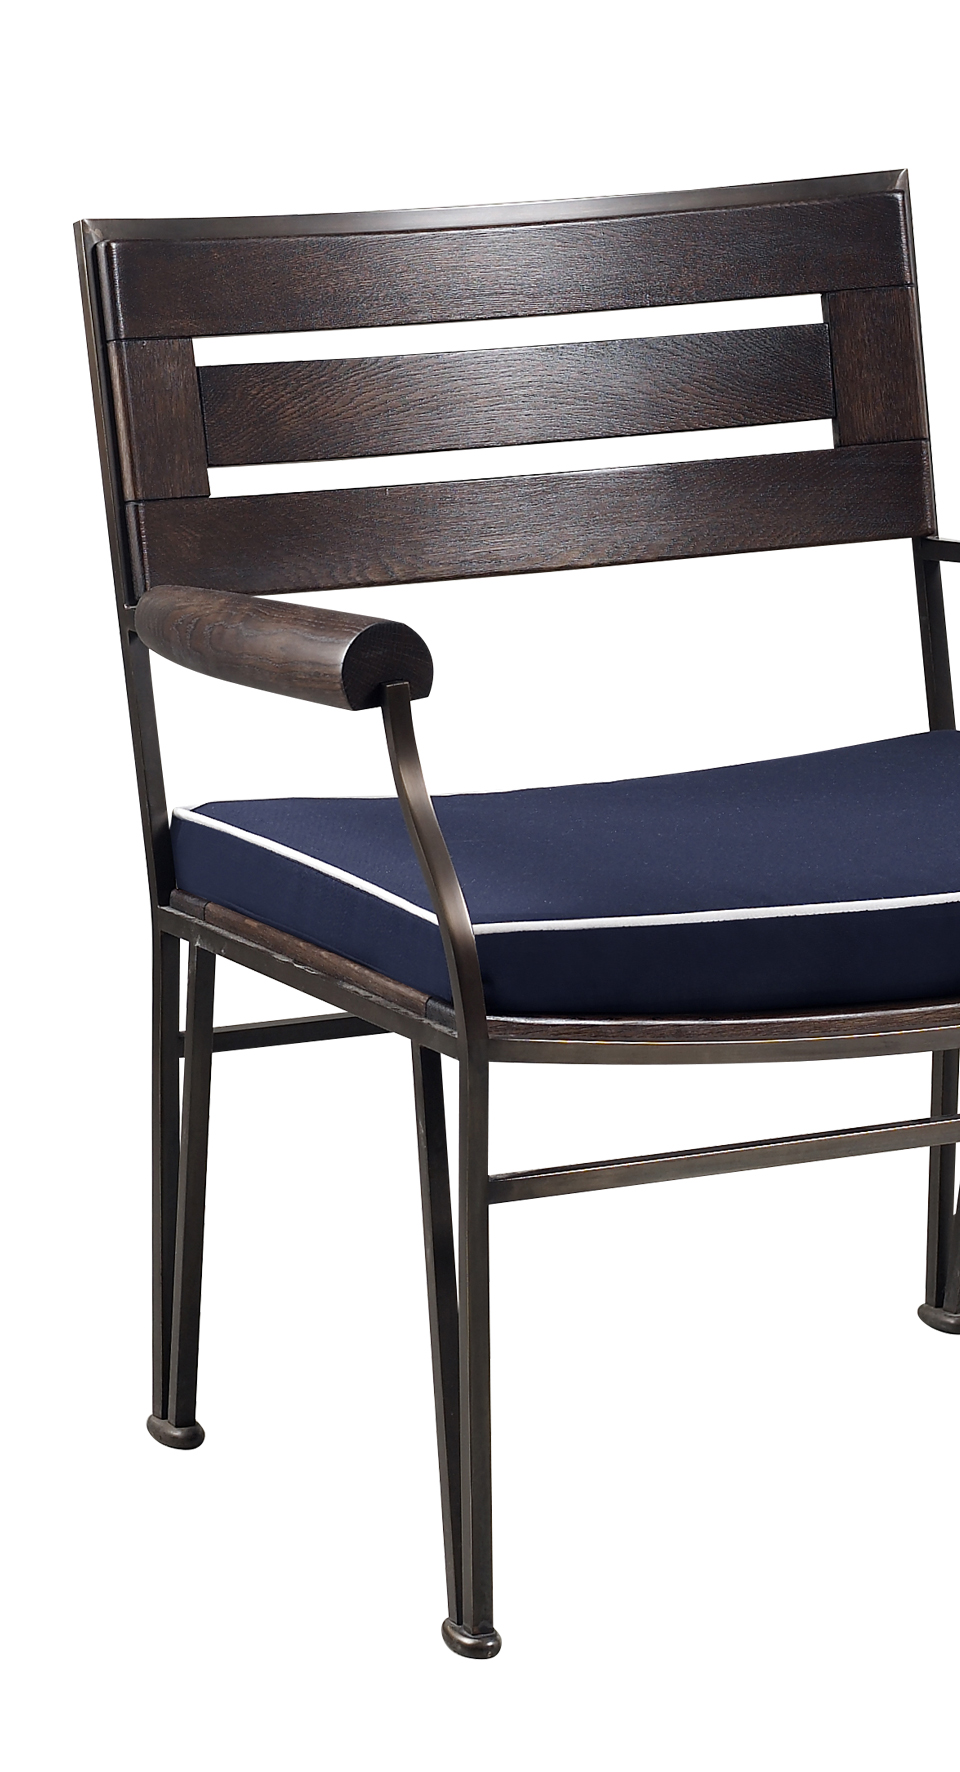 Cernobbio&amp;amp;nbsp;— кресло из дерева и бронзы с пуфом с подушкой из ткани или кожи из каталога мебели для улицы Promemoria | Promemoria